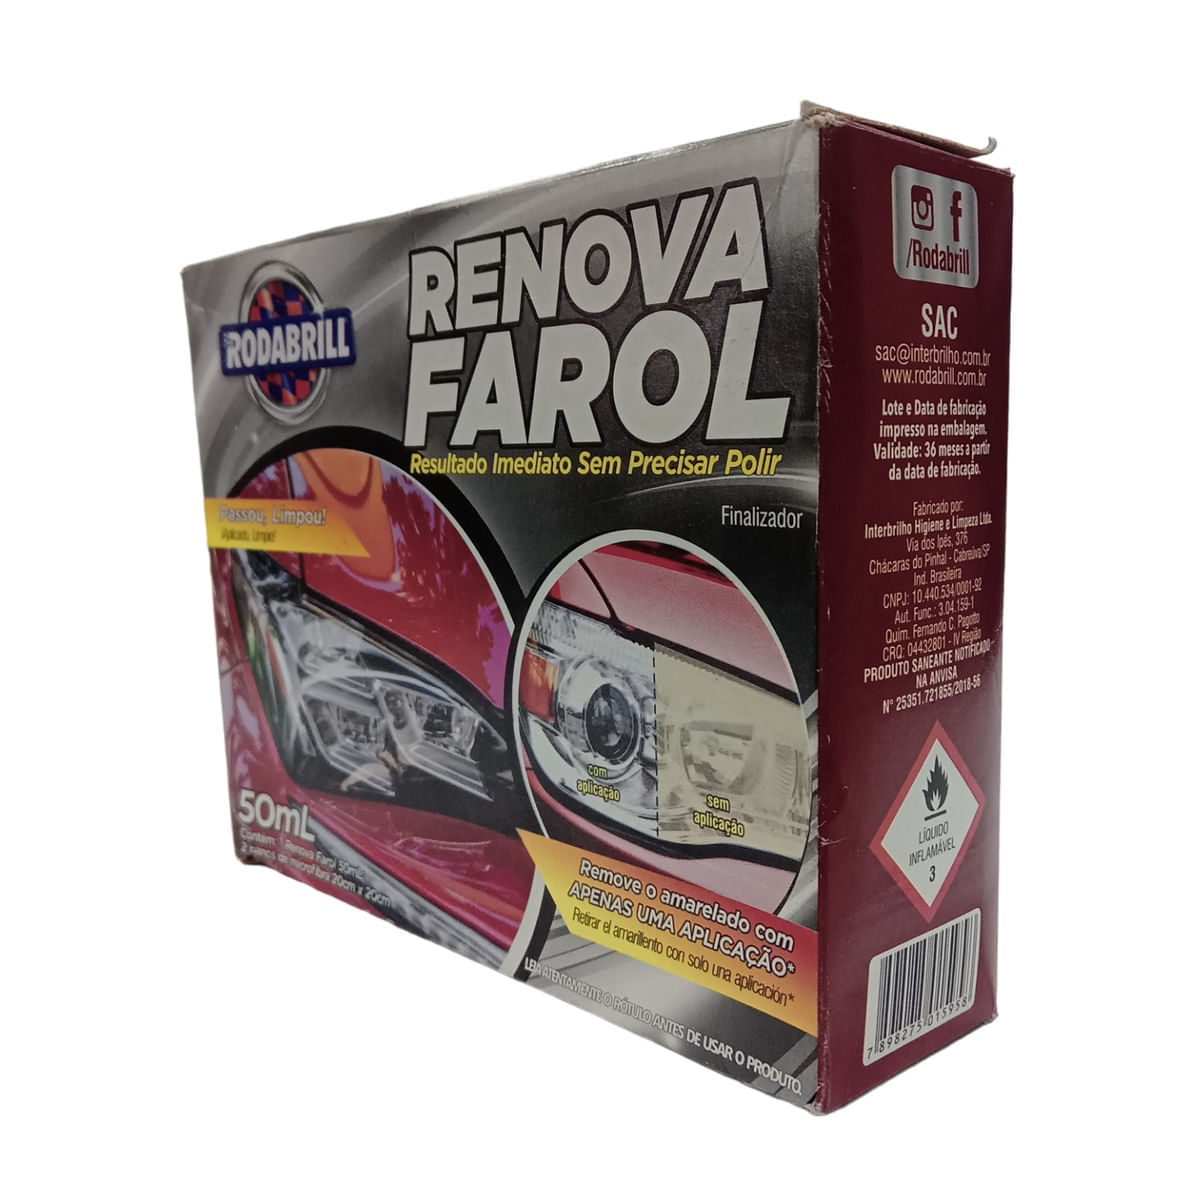 Renovador de Farol Rodabrill 50ml ( Acompanha 2 Panos de Microfibra)